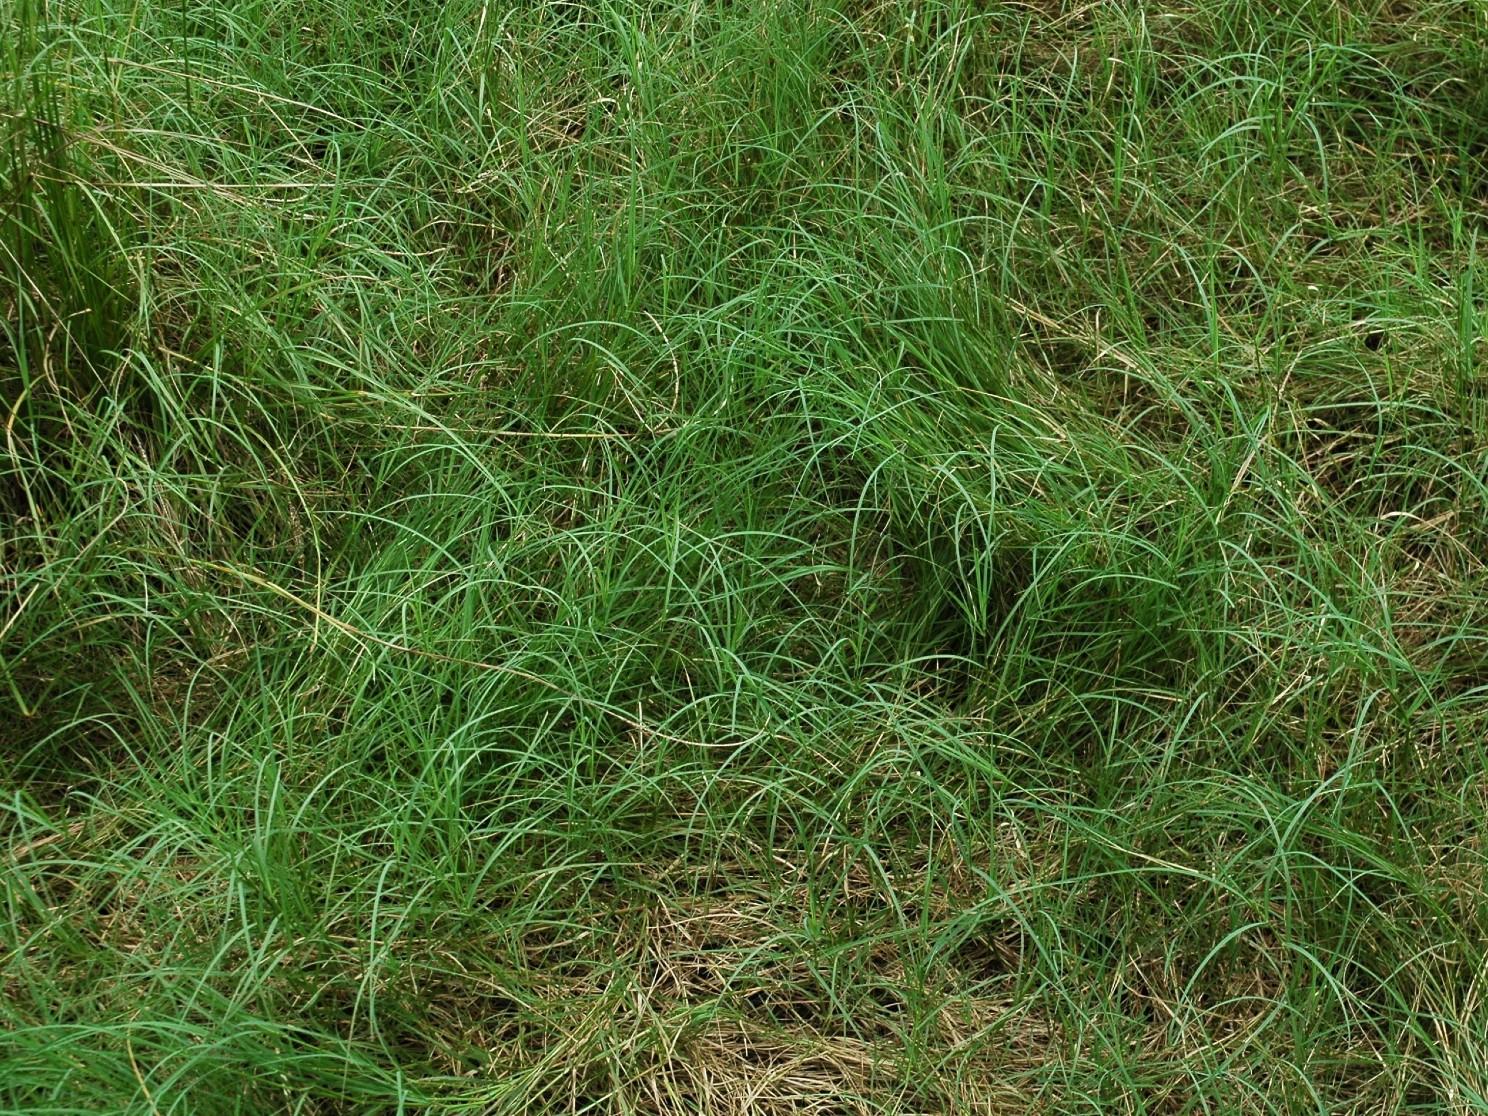 area full of bermudagrass weeds